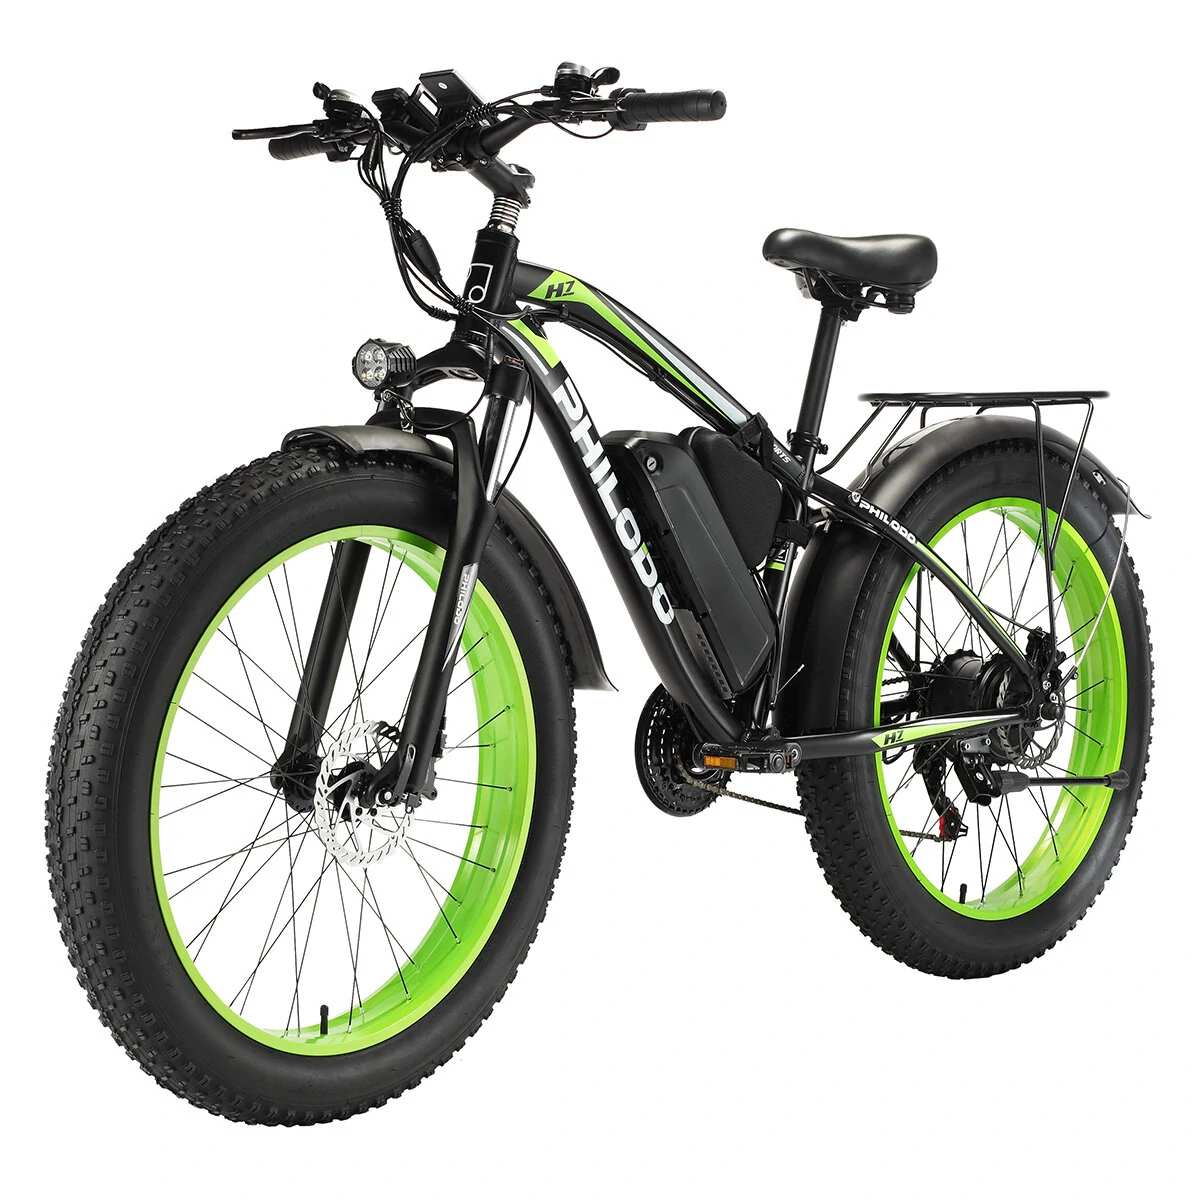 PHILODO H7 1000W Tire Electric Bicycle Banggood Coupon Promo Code (CZ Warehouse)